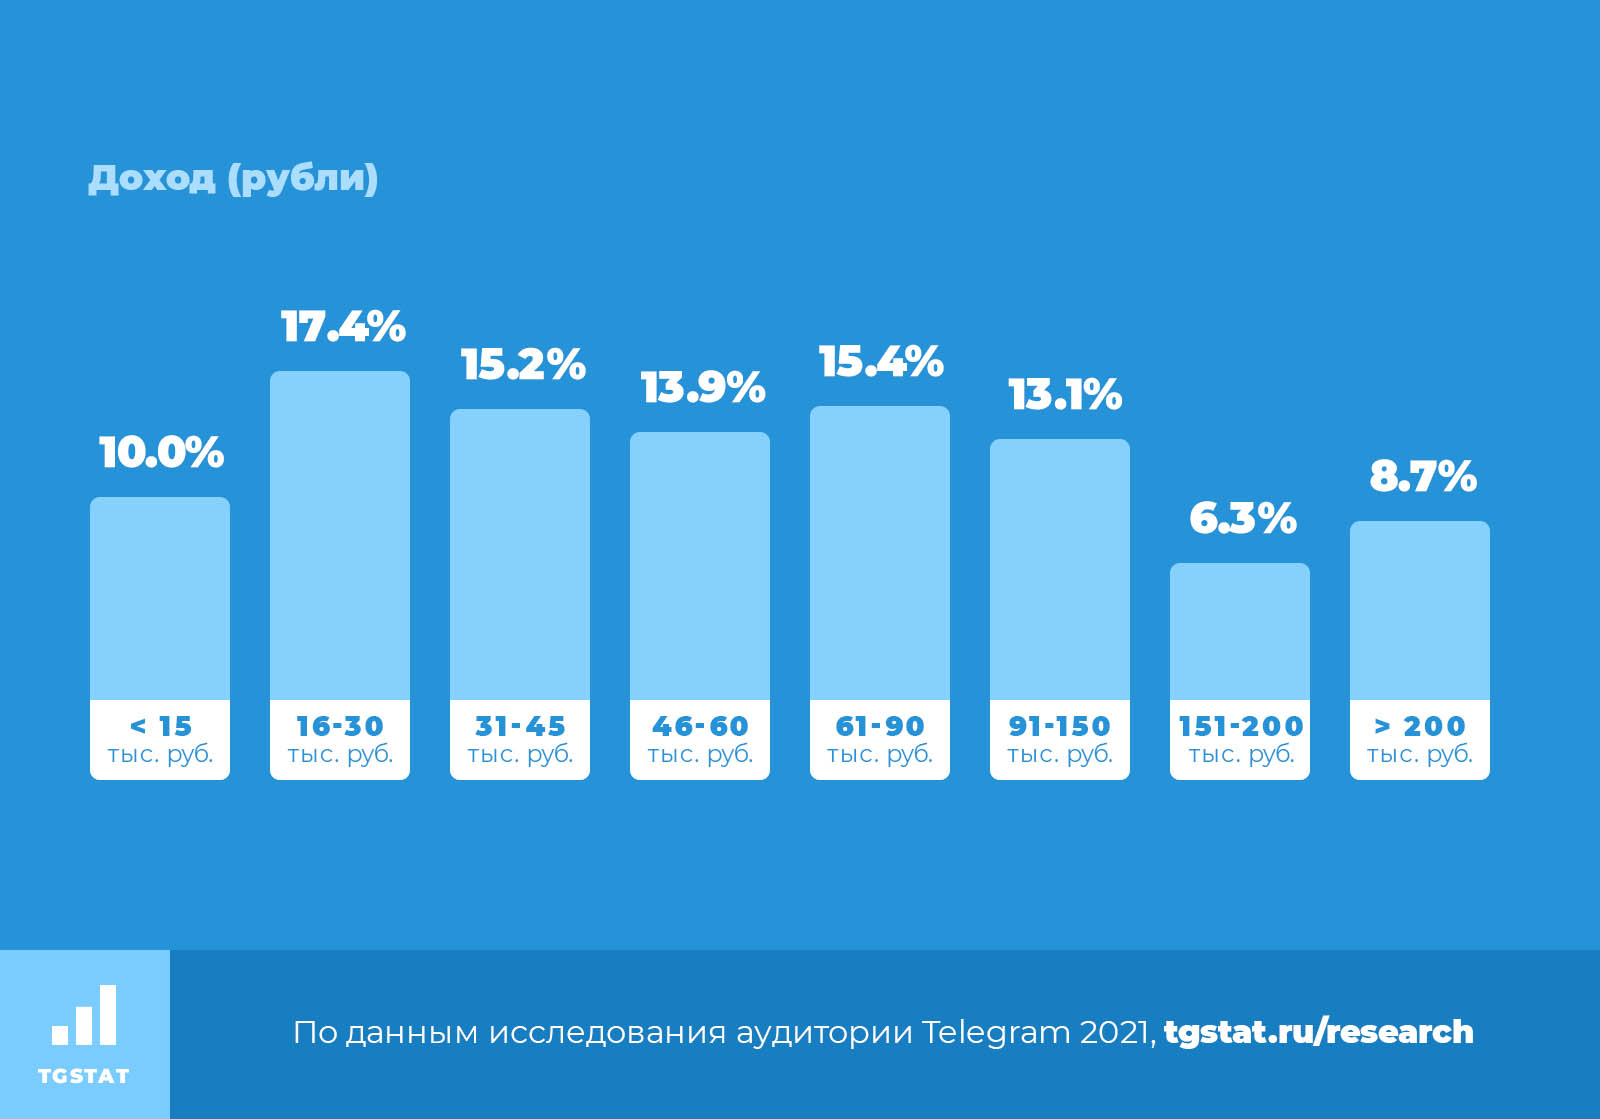 Статистика аудитории Telegram по доходам